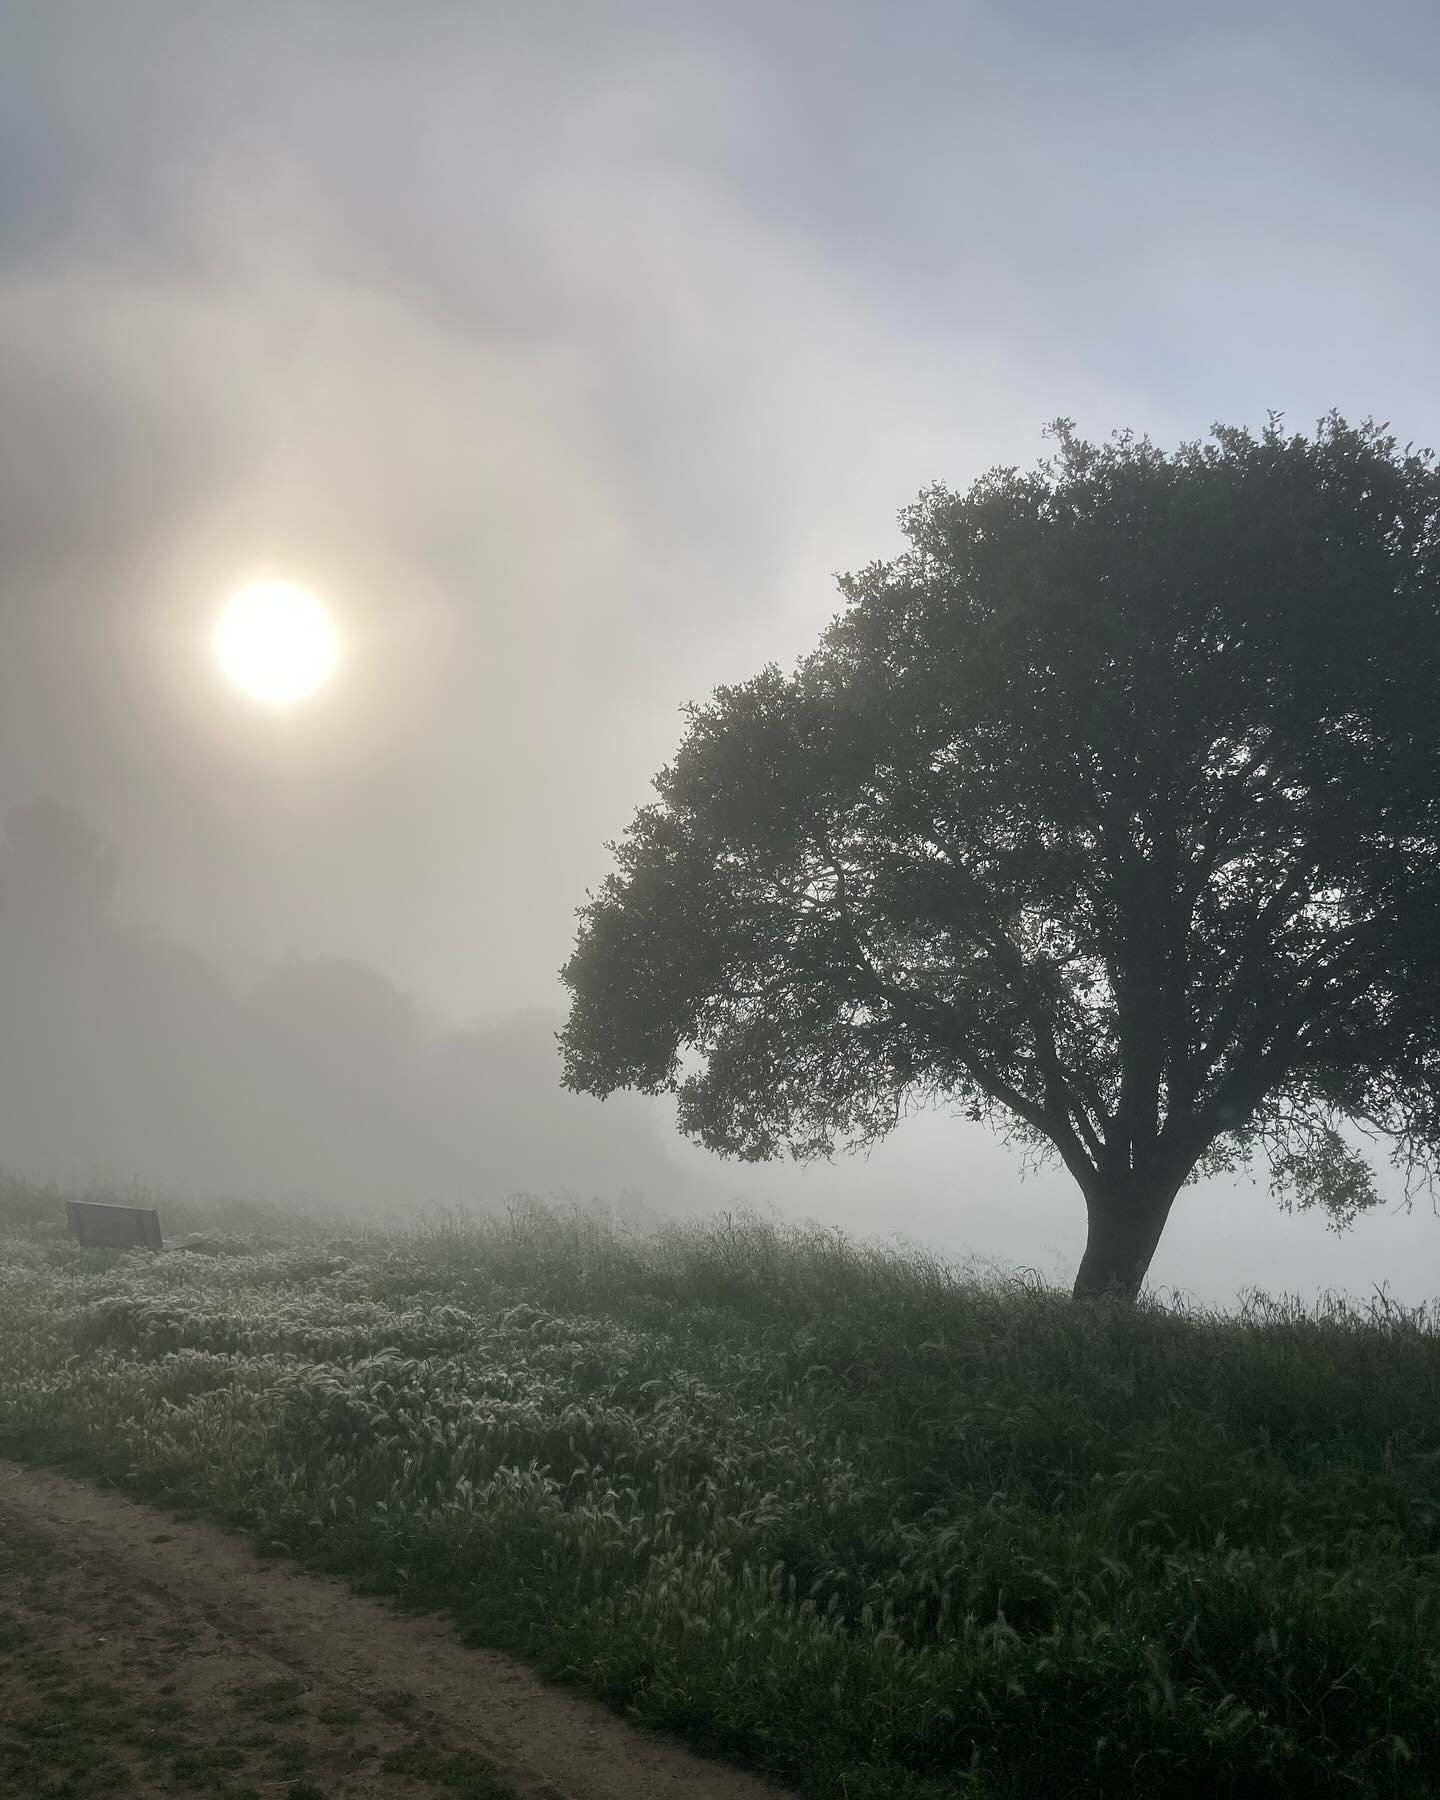 Misty Oakland morning 😌

#chabotregionalpark #earlymorning #eastbayhills #oaklandhills #oaklandlife 

Jackiecare.com 
DRE#01350486 
Compass